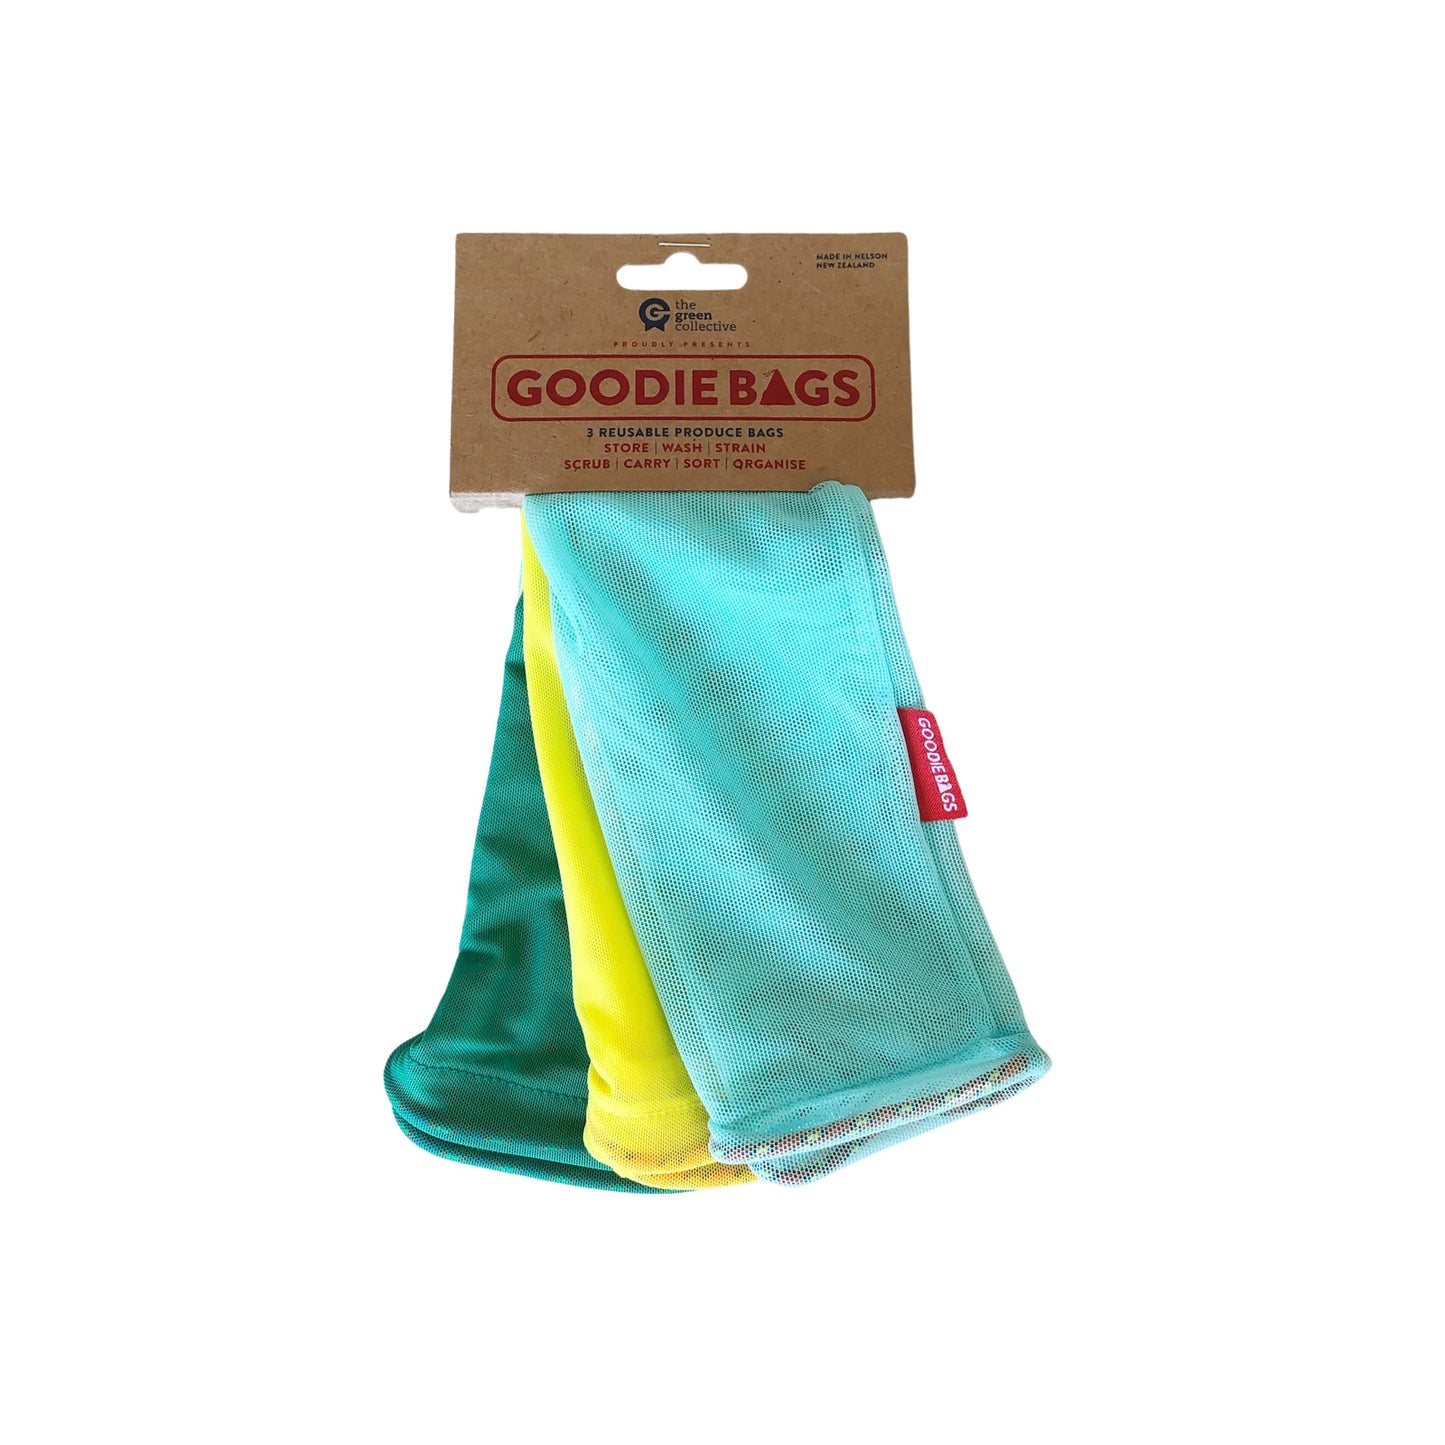 Goodie Bags 3 Pack - Reusable Bags